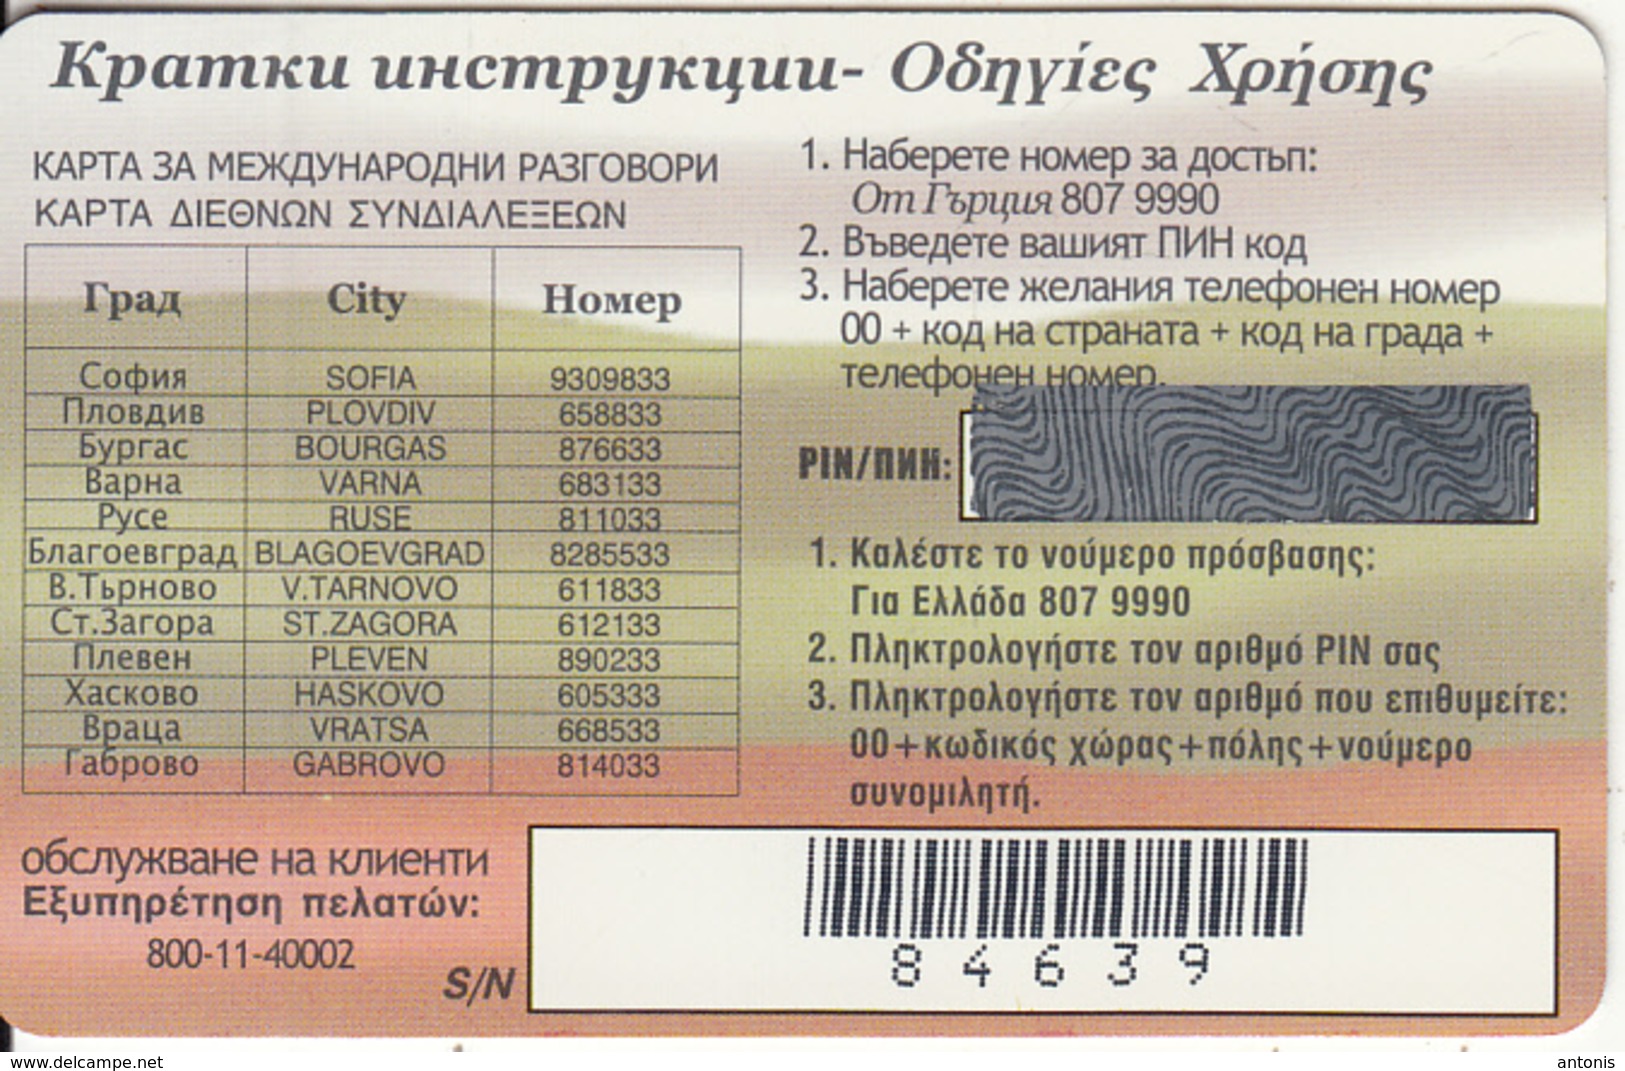 GREECE - Bulgaria/Govori, Amimex Prepaid Card 5 Euro, Tirage 5000, 04/05, Mint - Greece